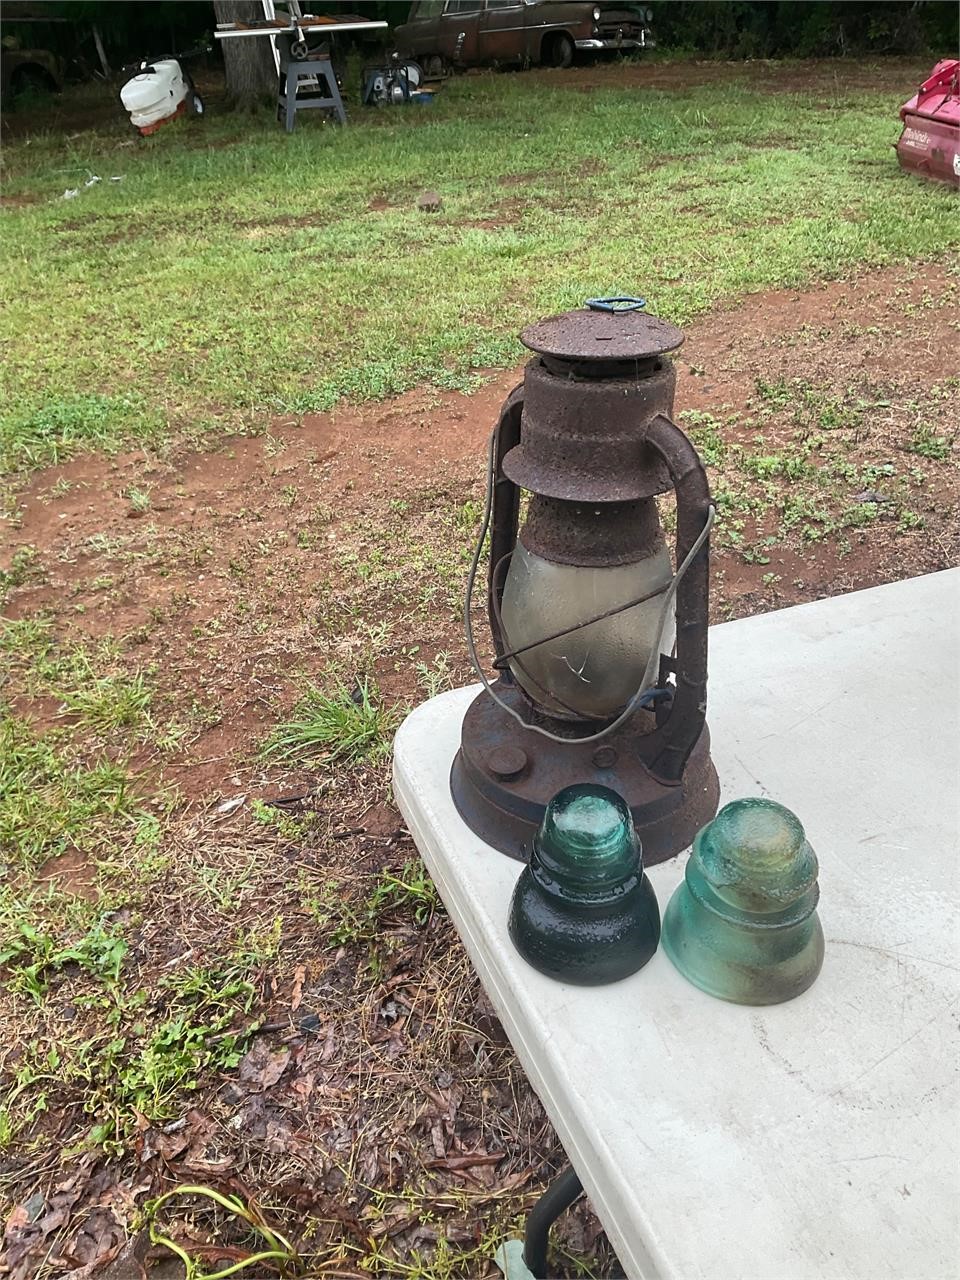 Lantern and insulators